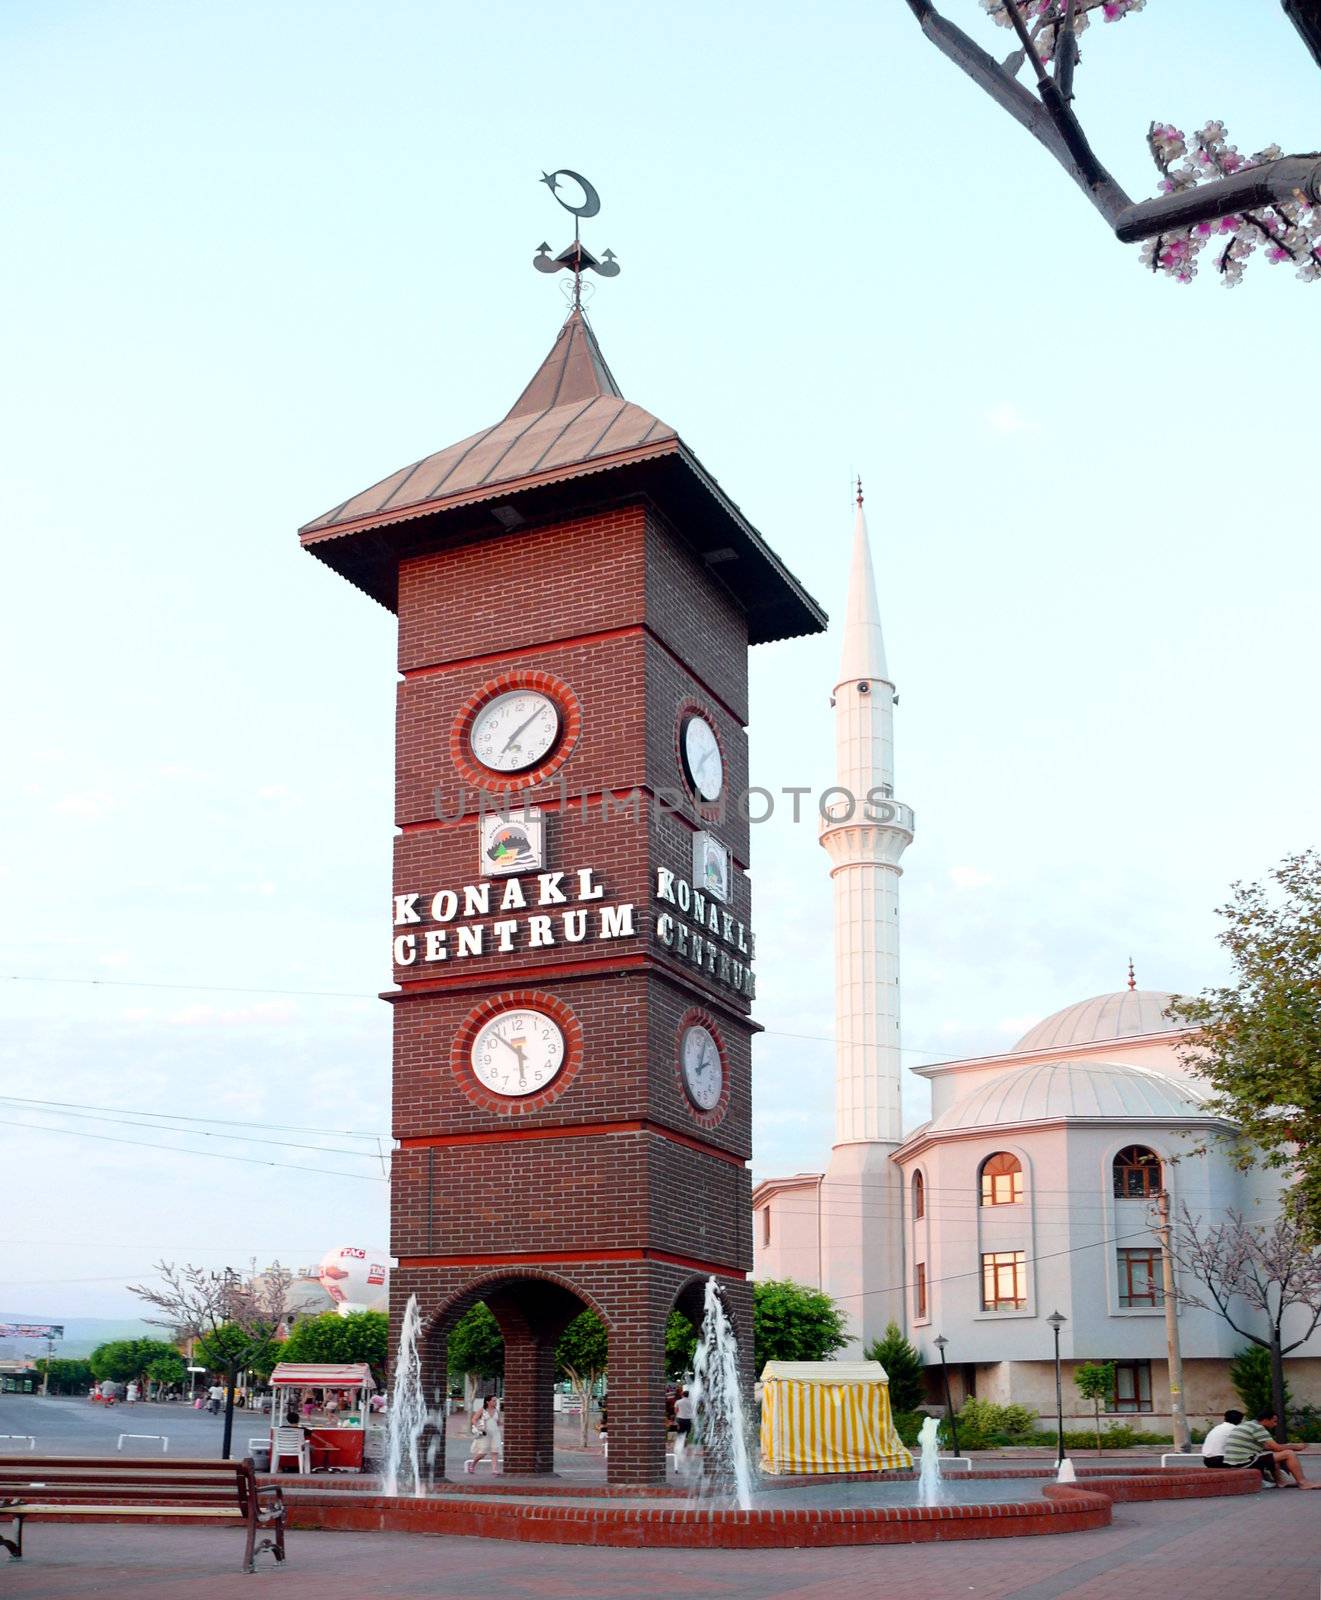 Tower with clock - Konakli, Turkey by Stoyanov